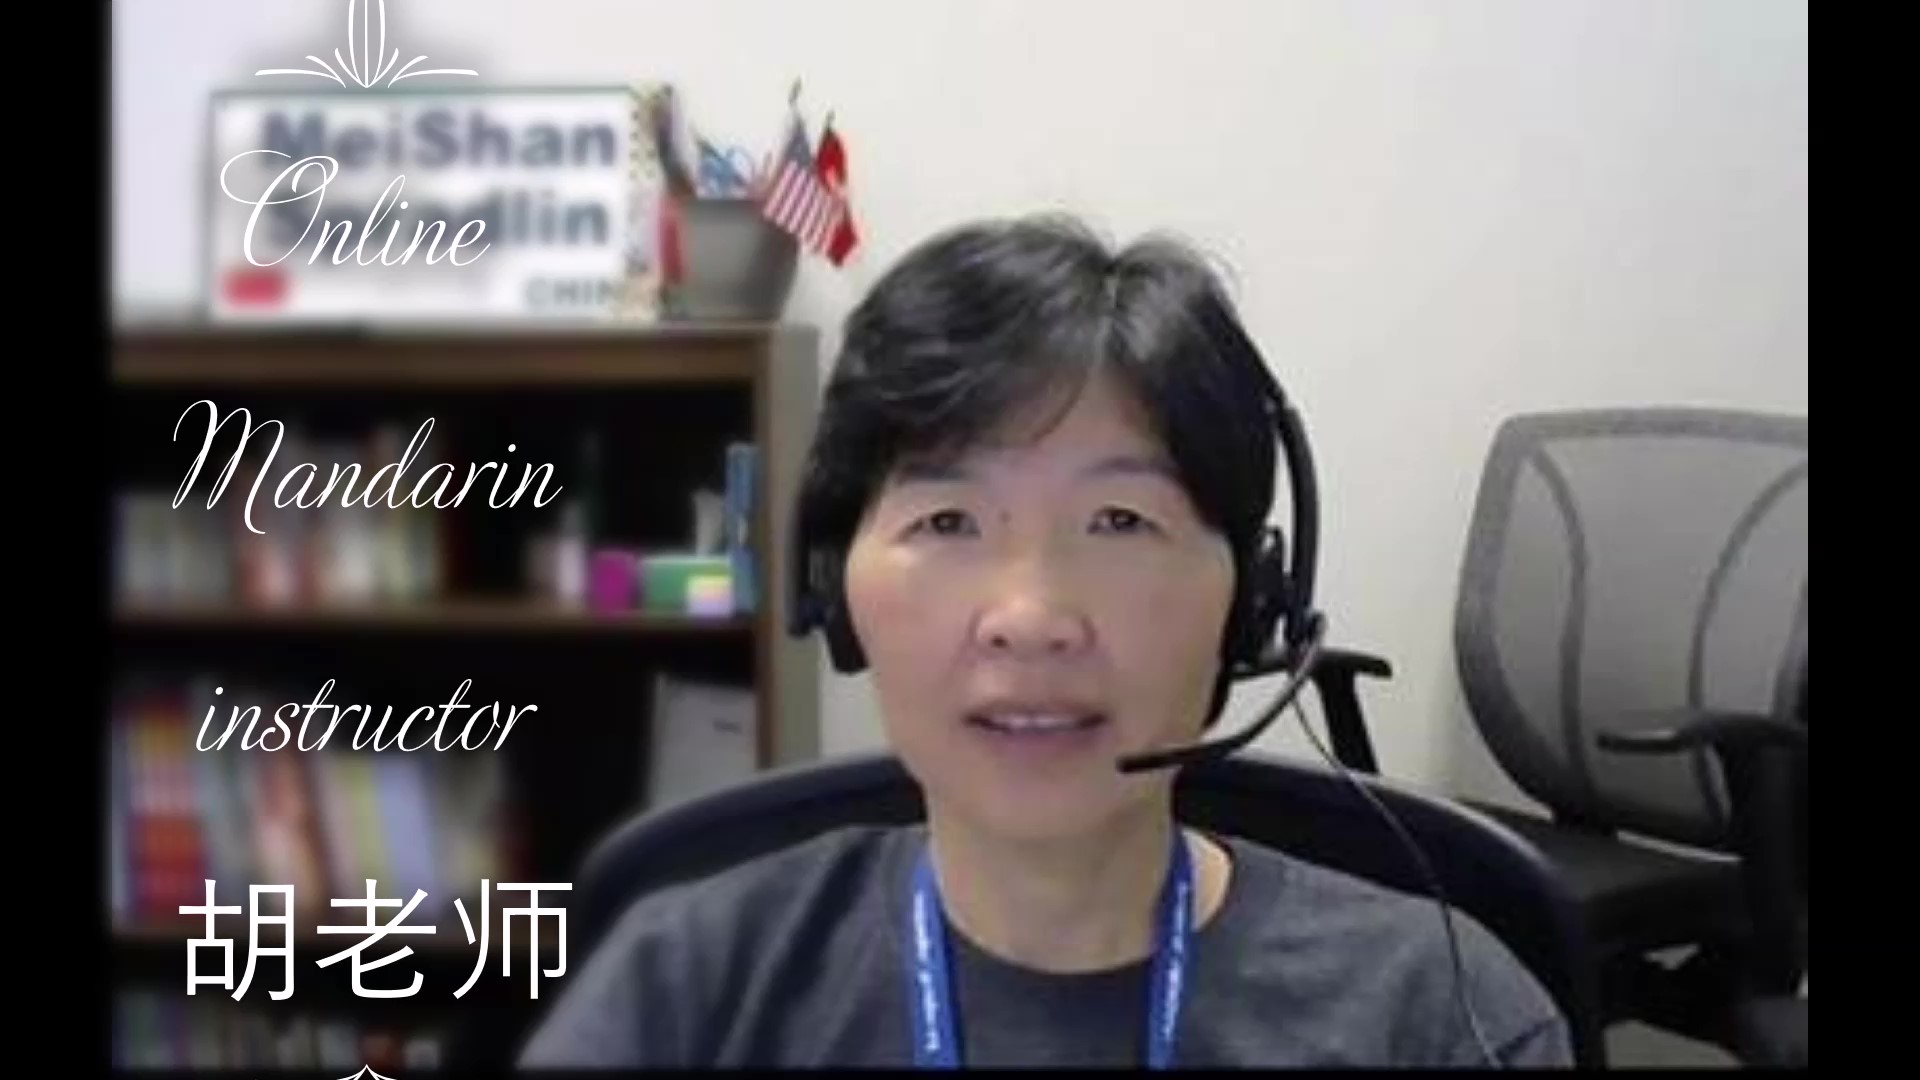 Online Mandarin Instructor profile picture.jpg